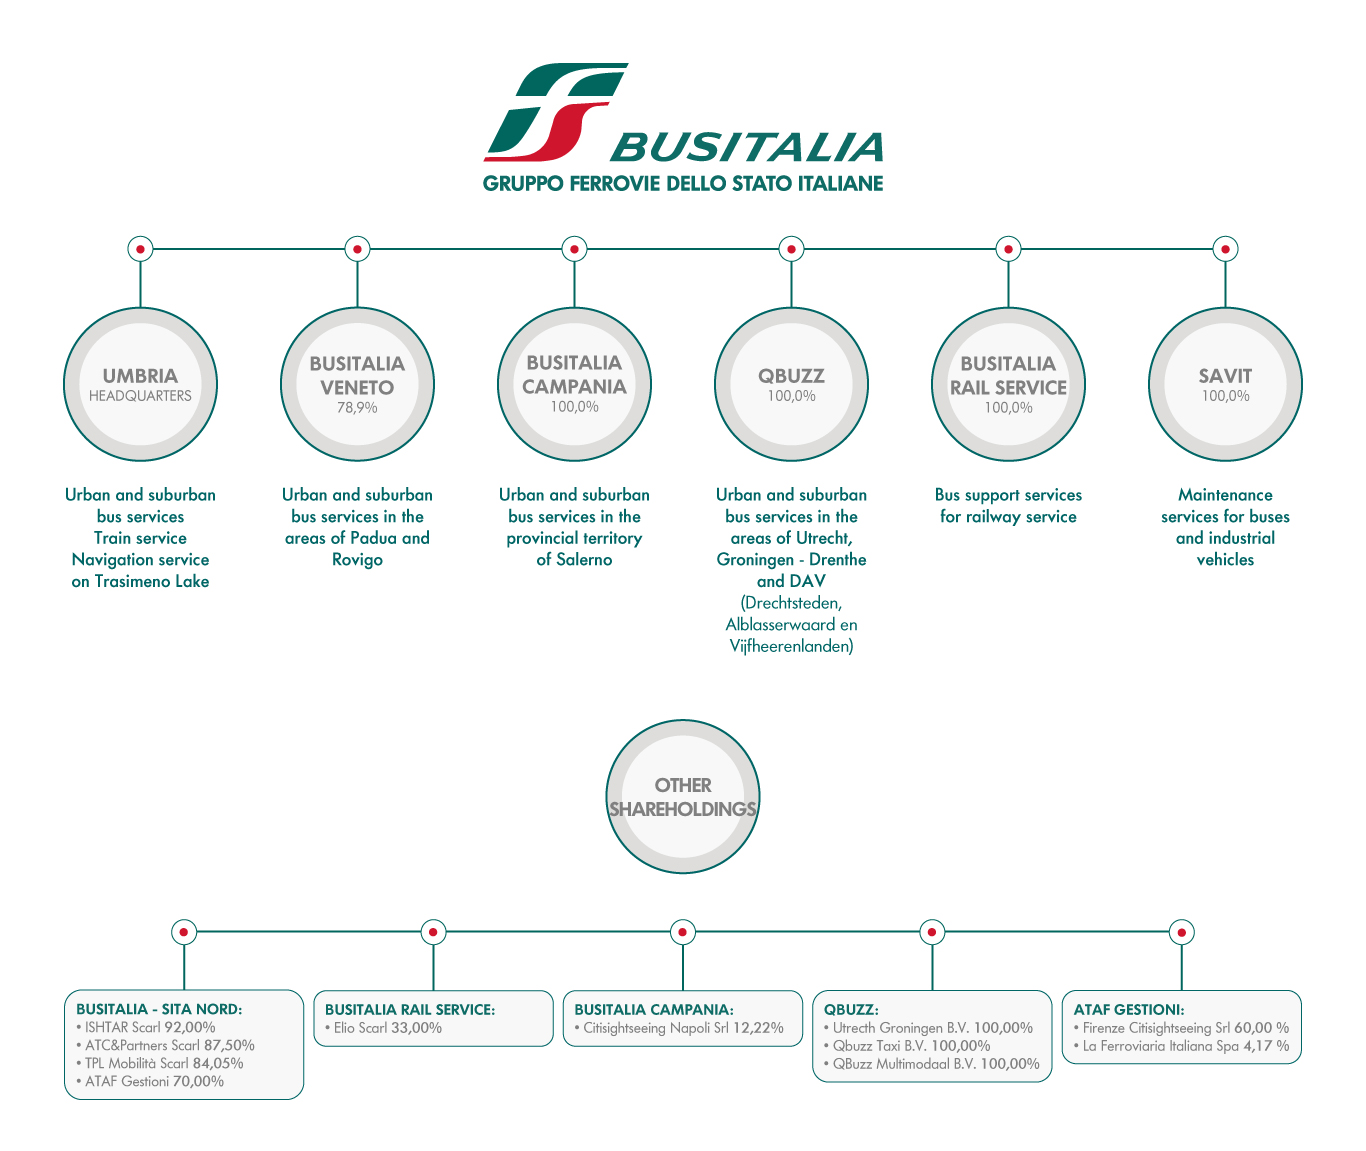 Organization chart and shareholdings of Busitalia companies